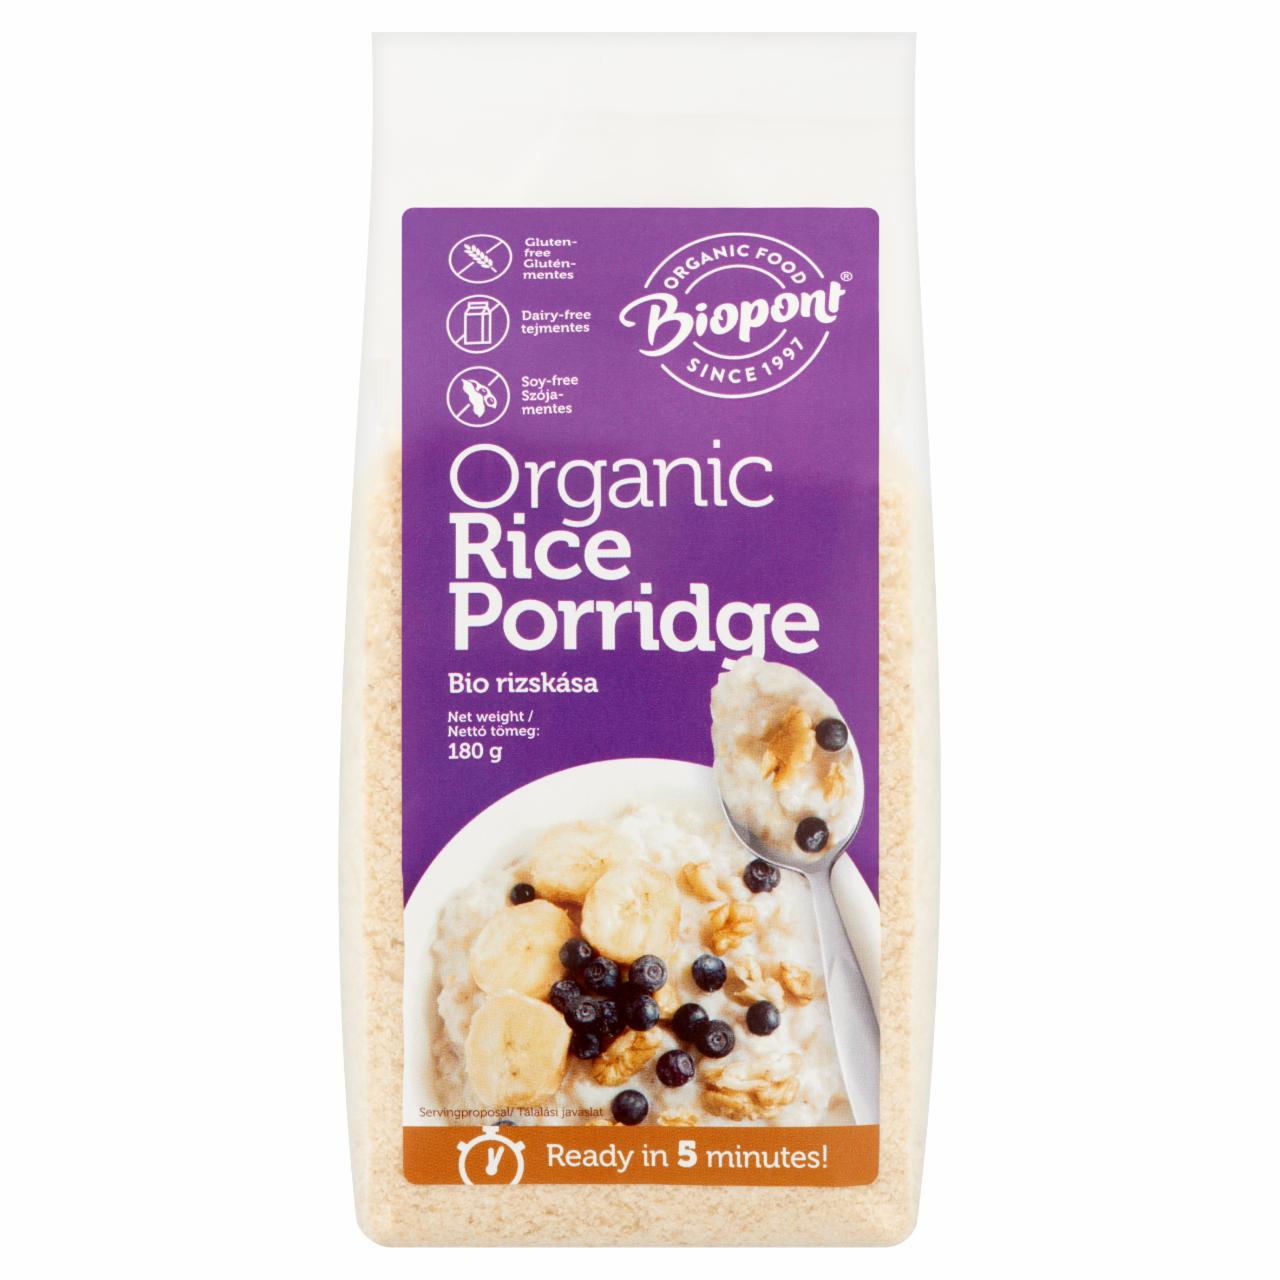 Fotografie - Organic Rice Porridge Biopont